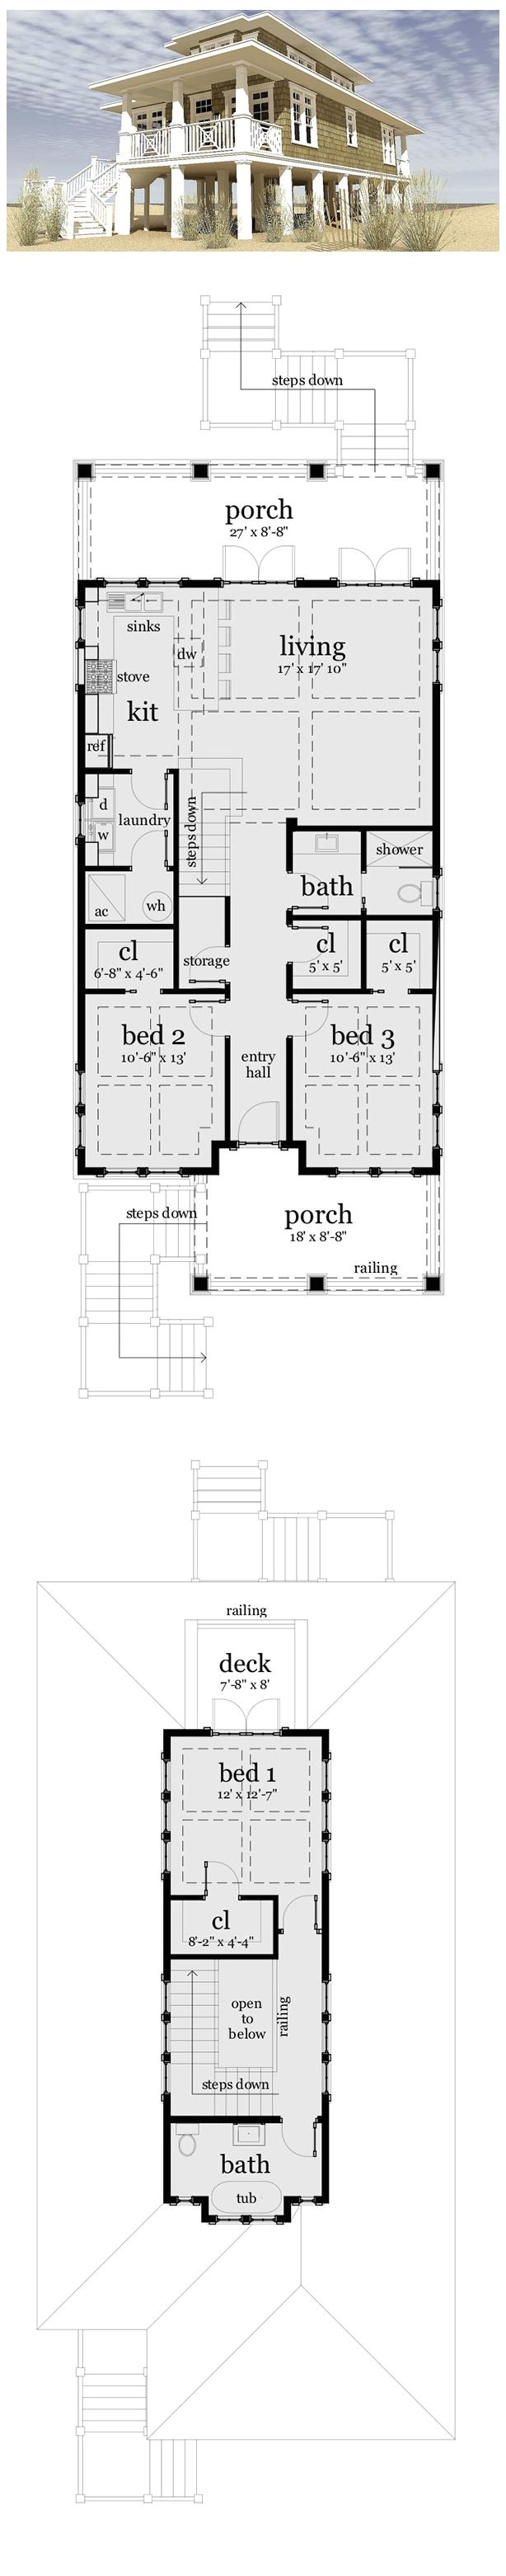 house plan 70806 total living area 1581 sq ft 3 bedrooms 2 bathrooms coastal houseplan beachhouse